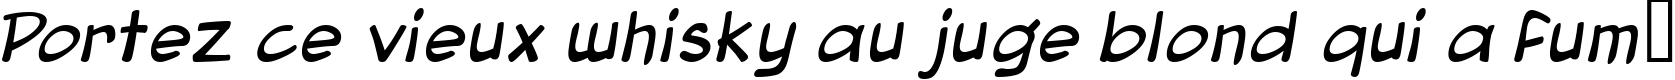 Пример написания шрифтом Blambot Pro Lite Italic текста на французском